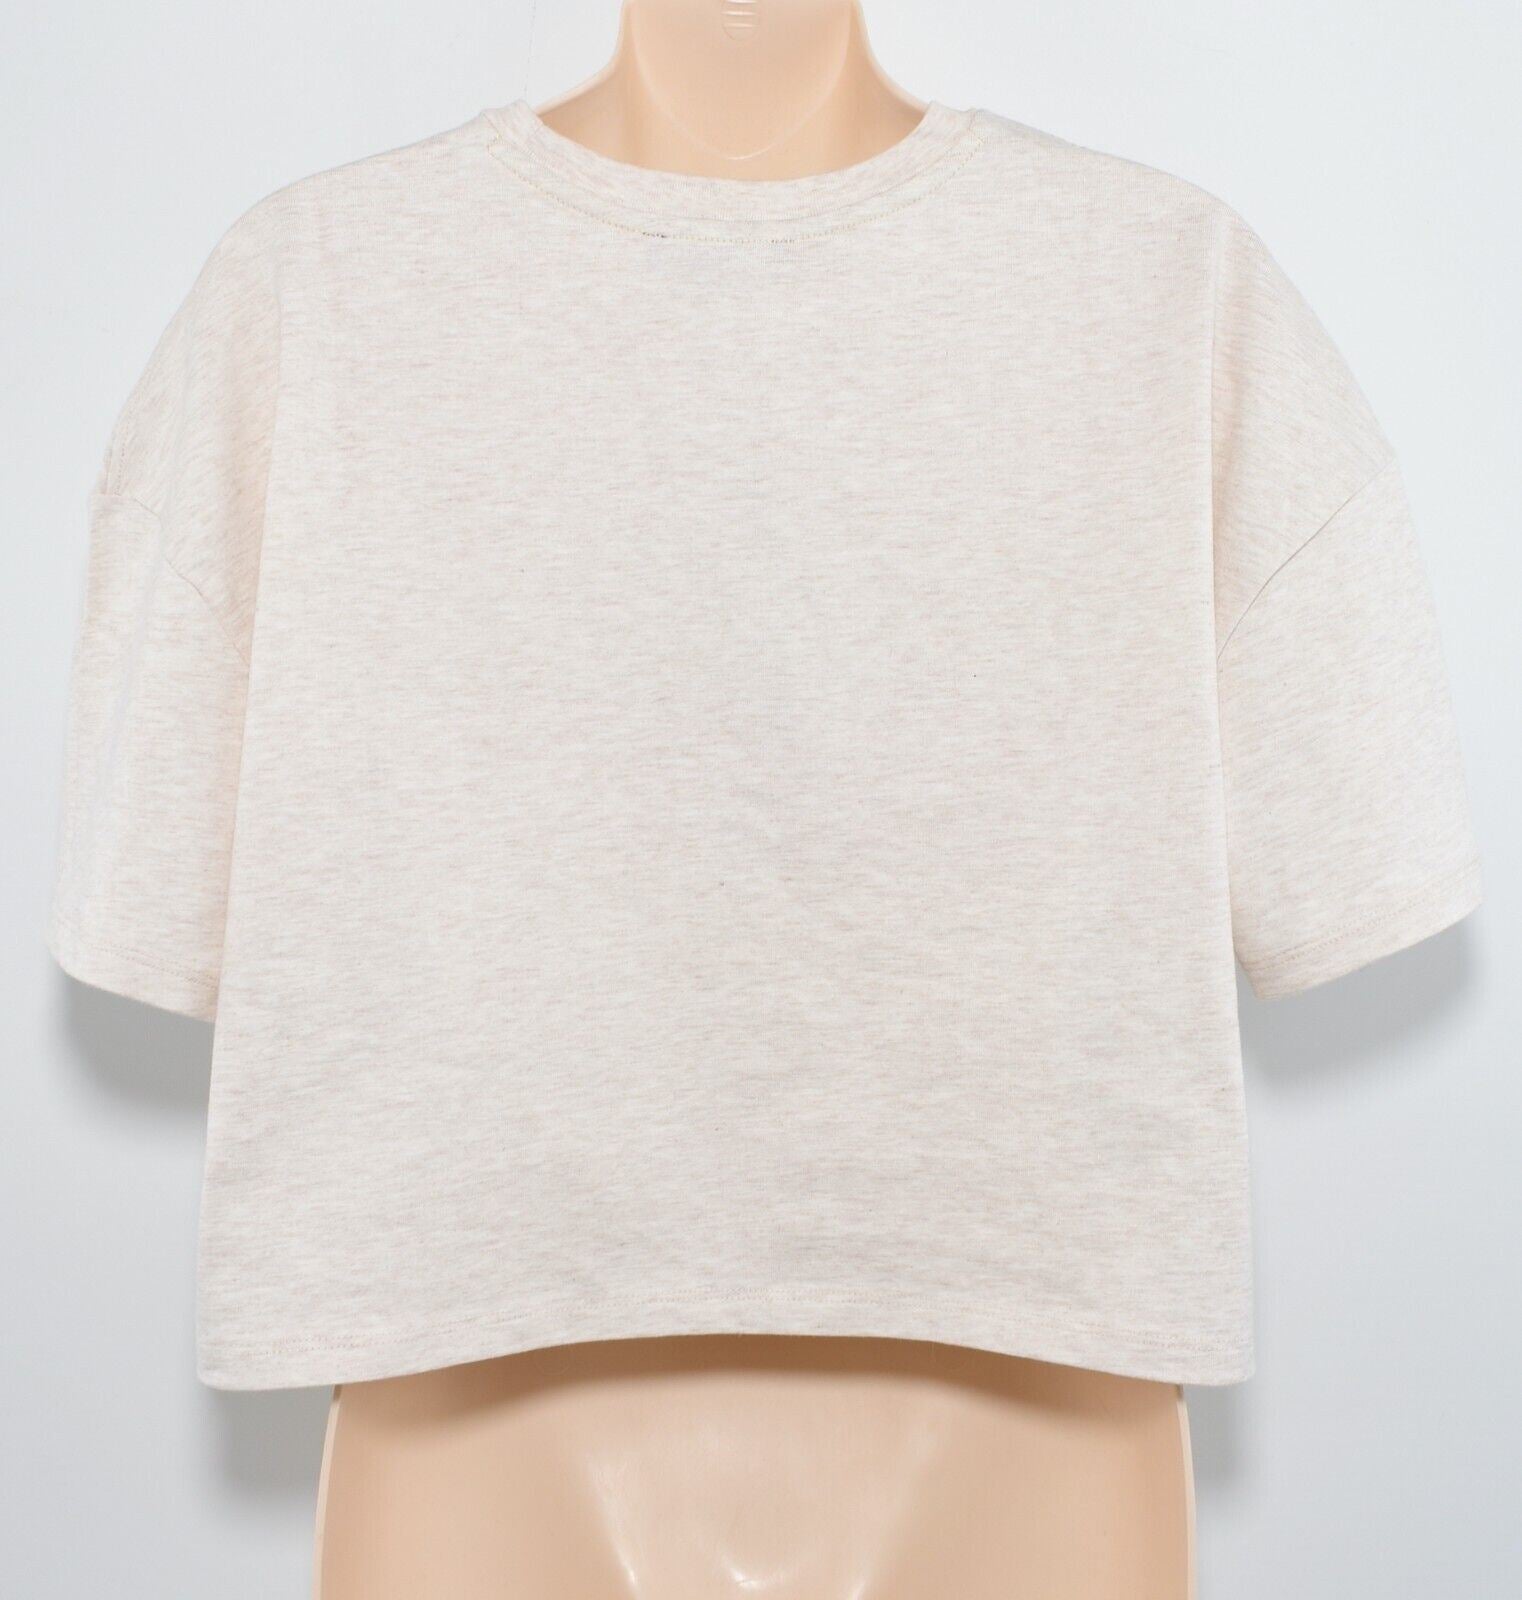 KANGOL Womens Cropped Boxy T-shirt Top, Oatmeal/Green Logo, size S /UK 10